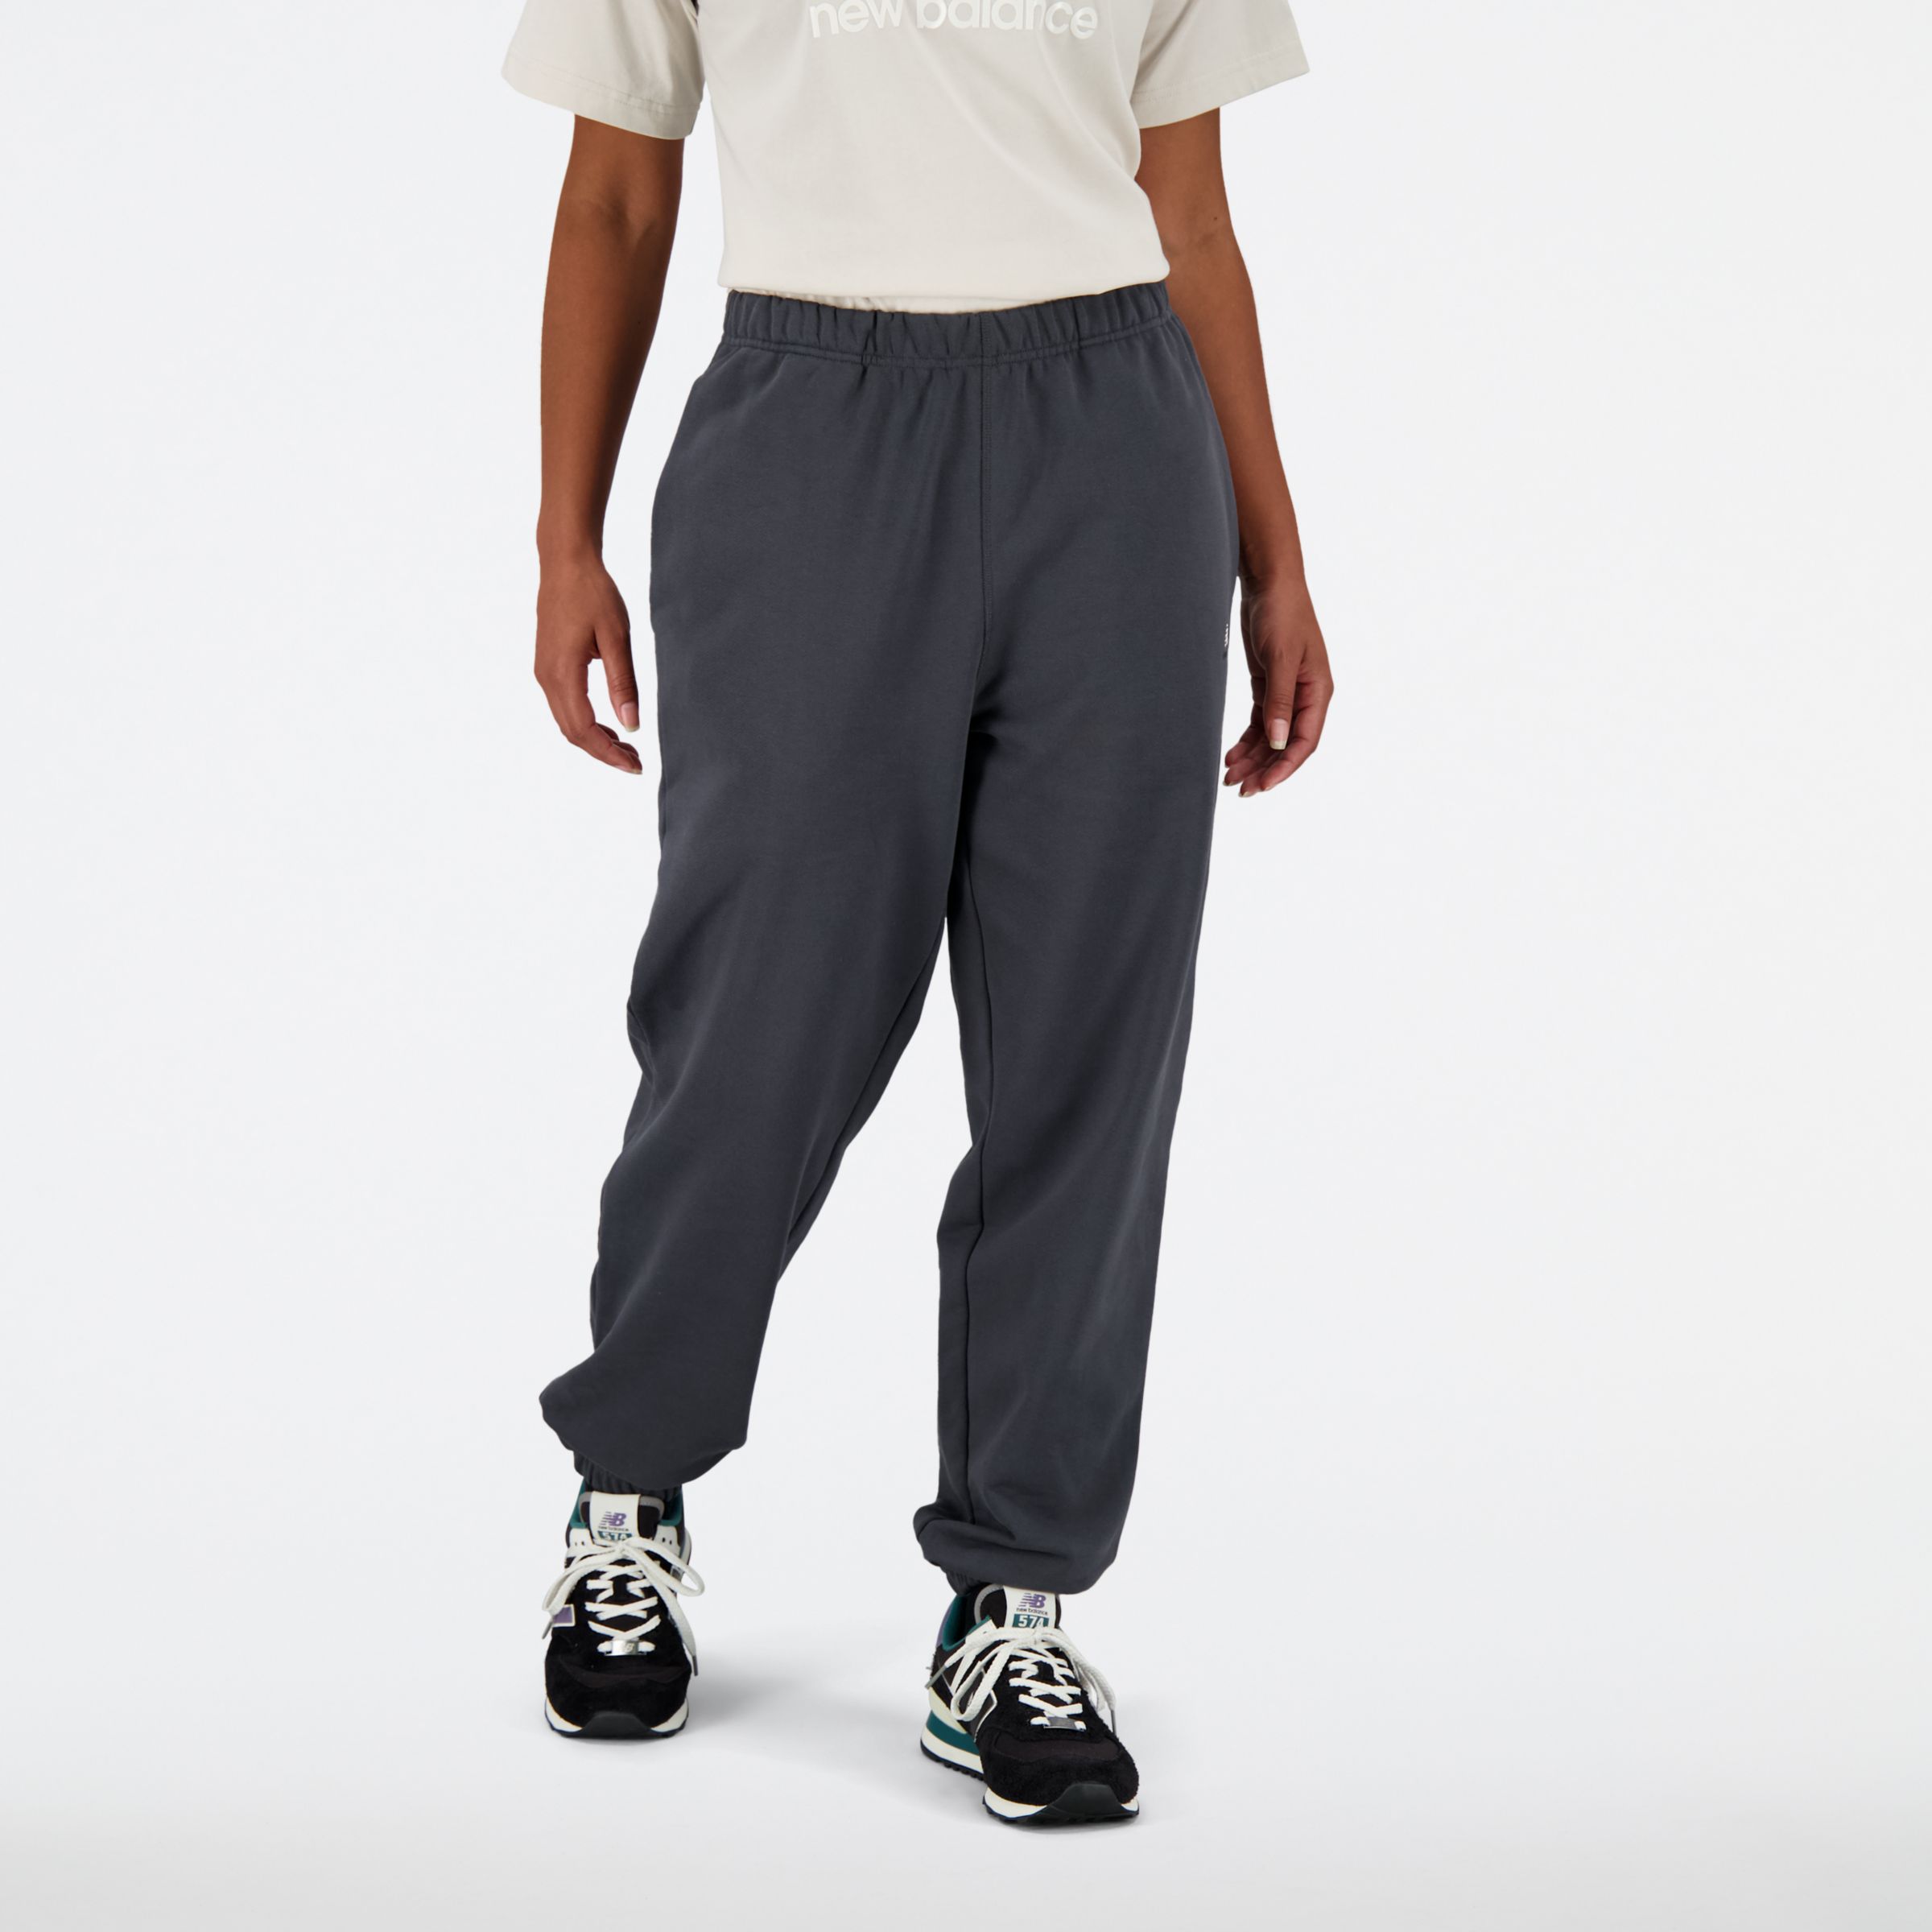 

New Balance Women's Sport Essentials Premium Fleece Pant Black - Black